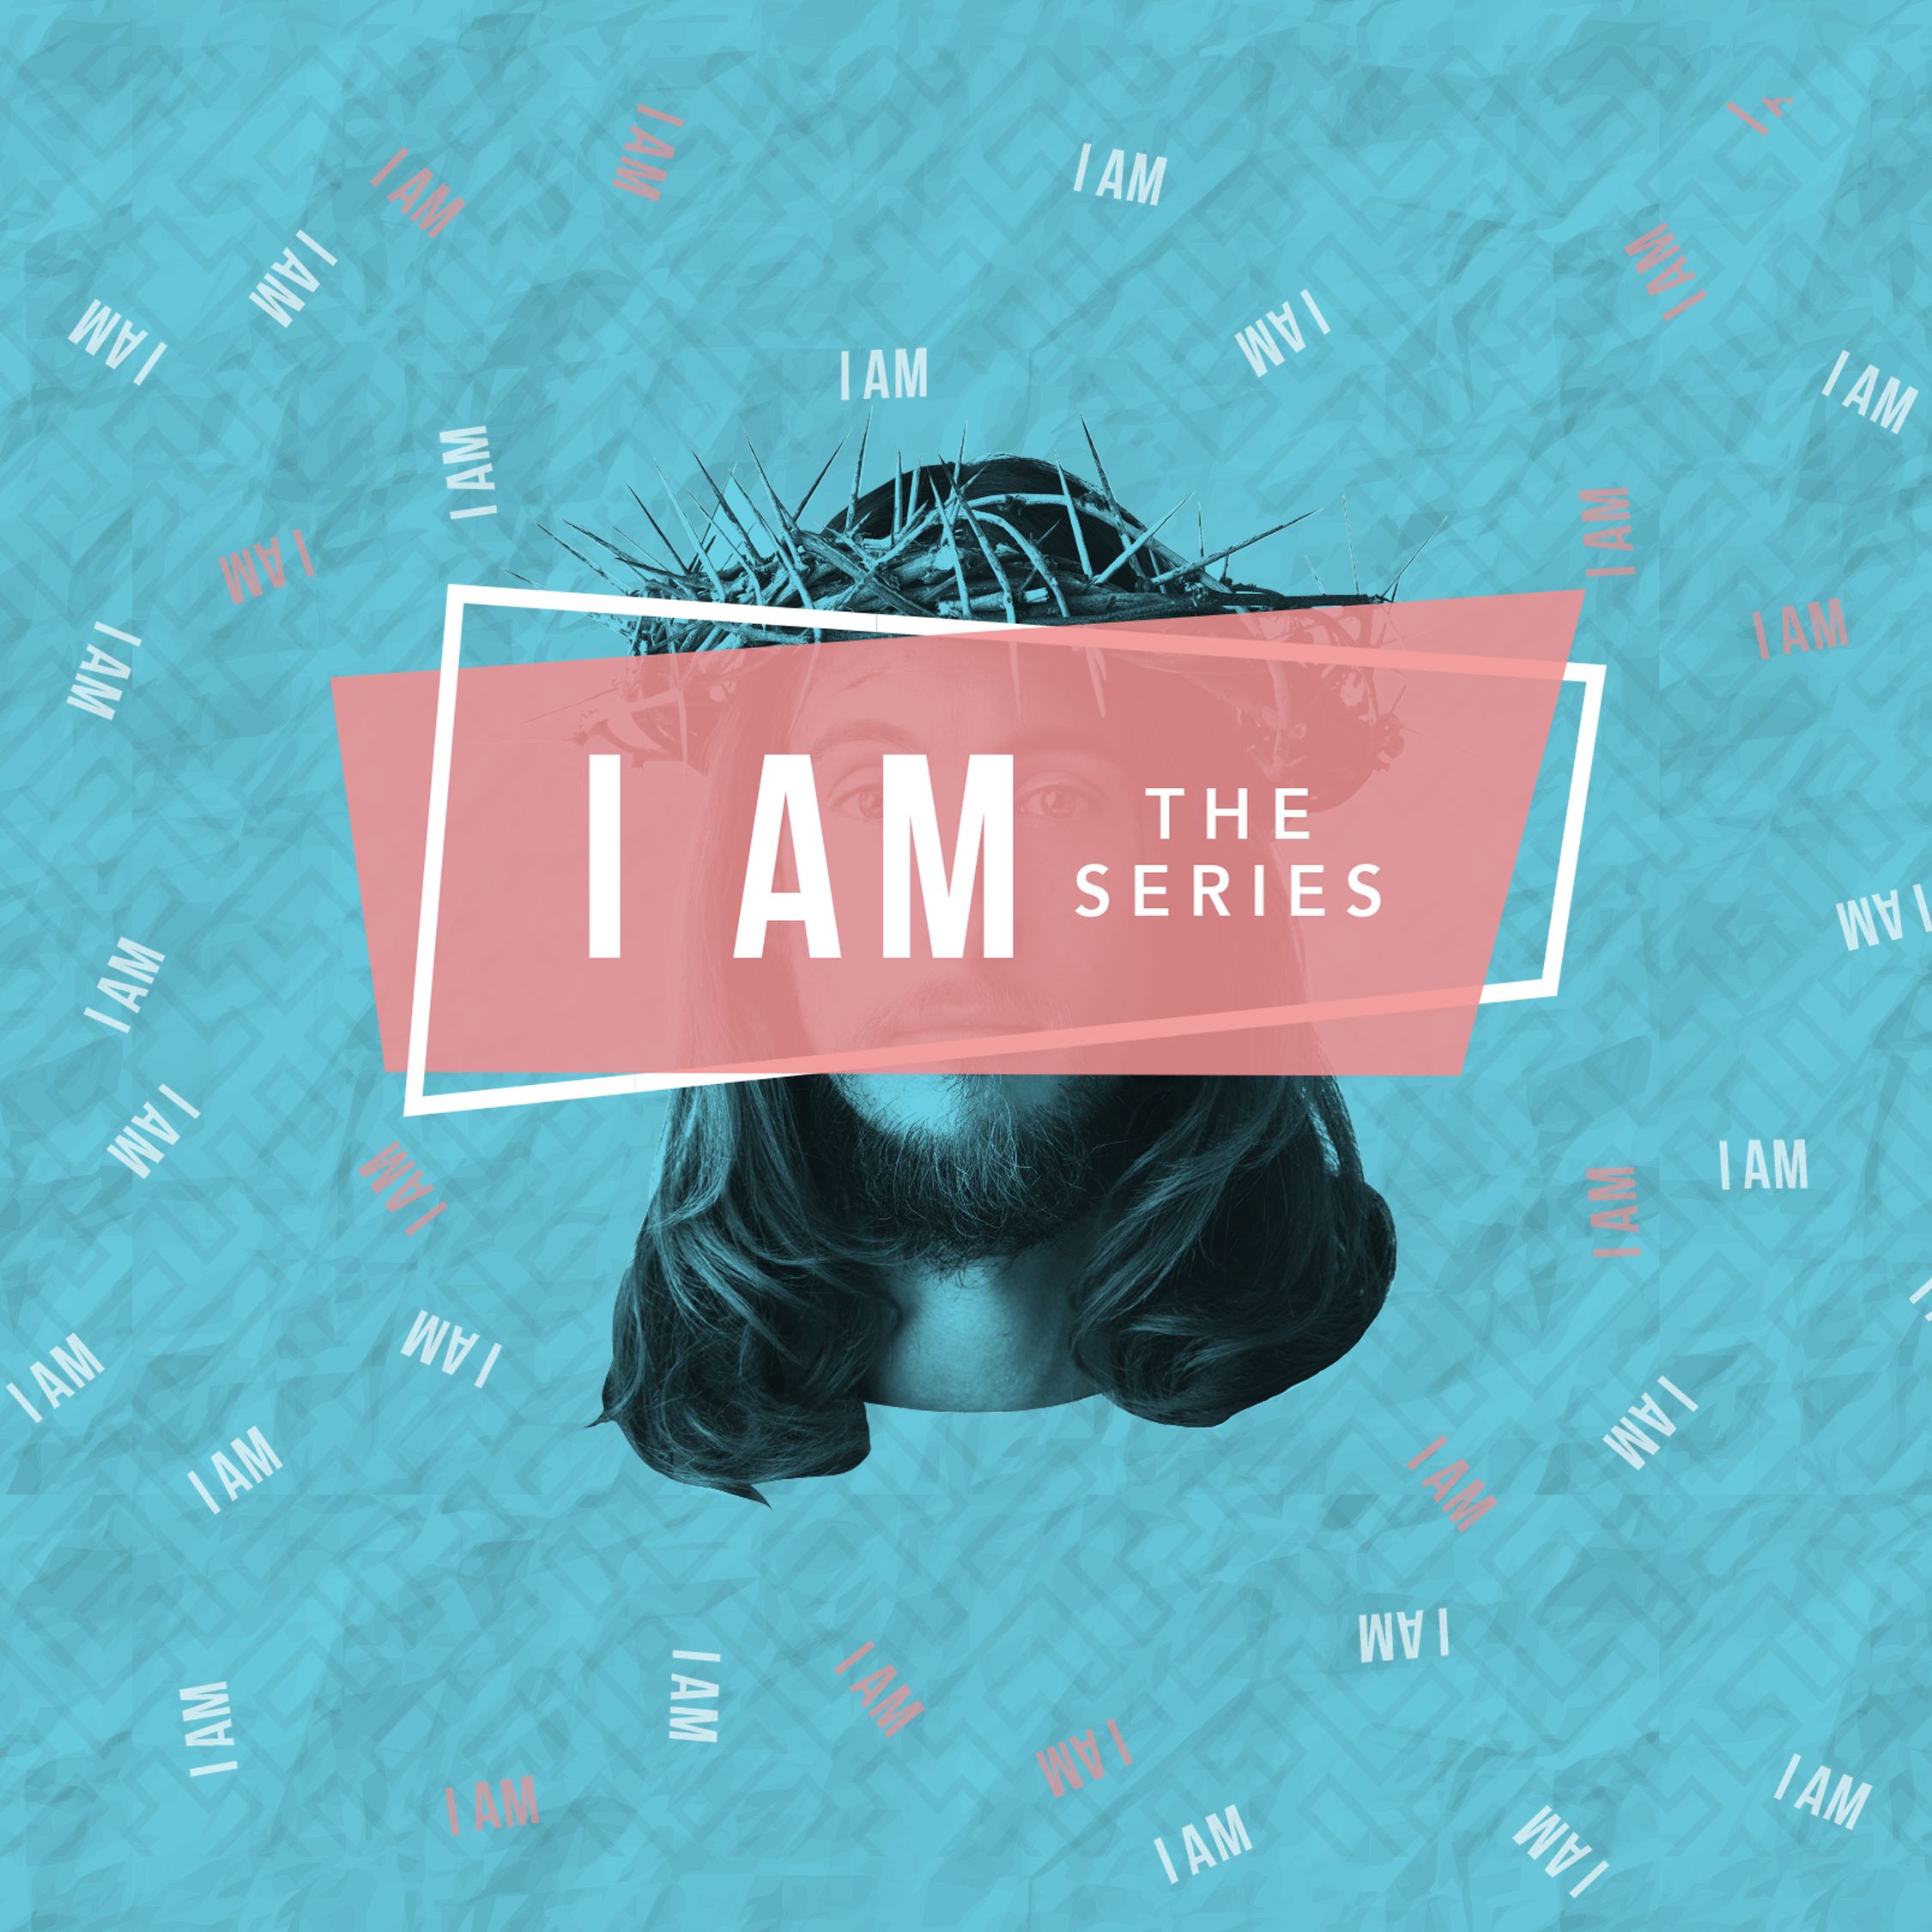 "I AM" | Series Introduction - 06/24/18 (Yorba Linda)